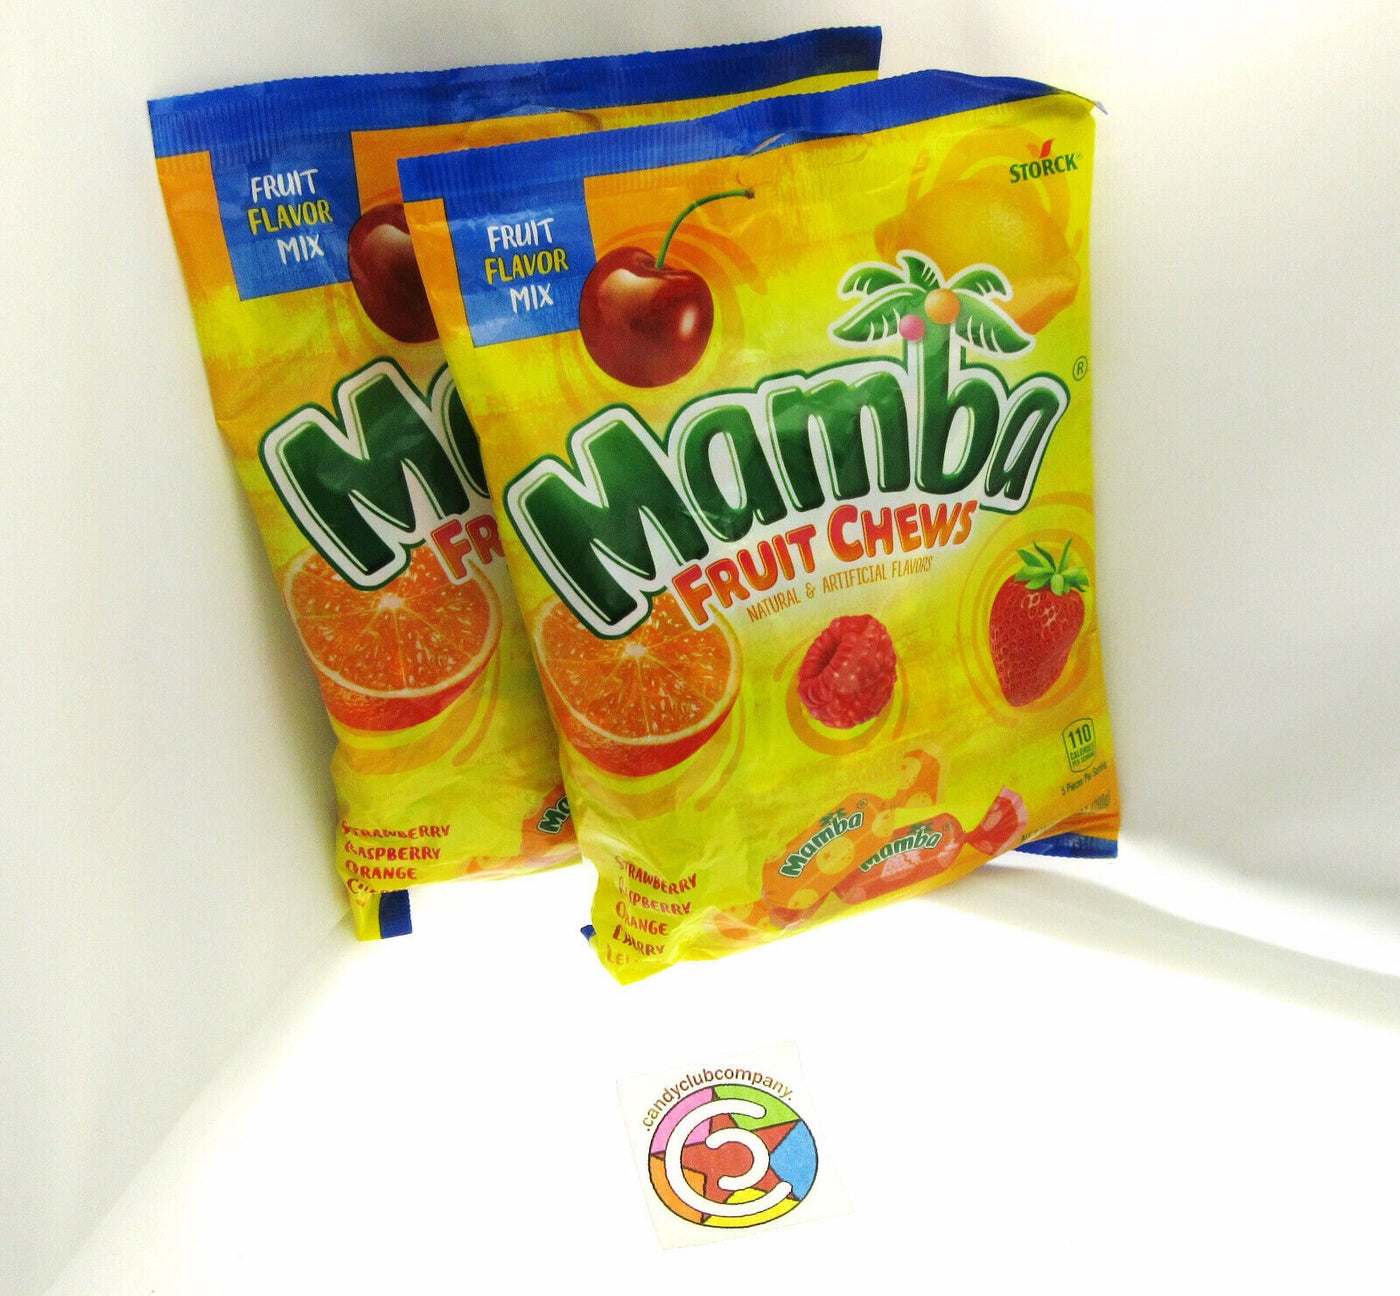 Mamba ~ Fruit Chews ~ American Candy ~ 7.05oz Bag ~ Lot of 2